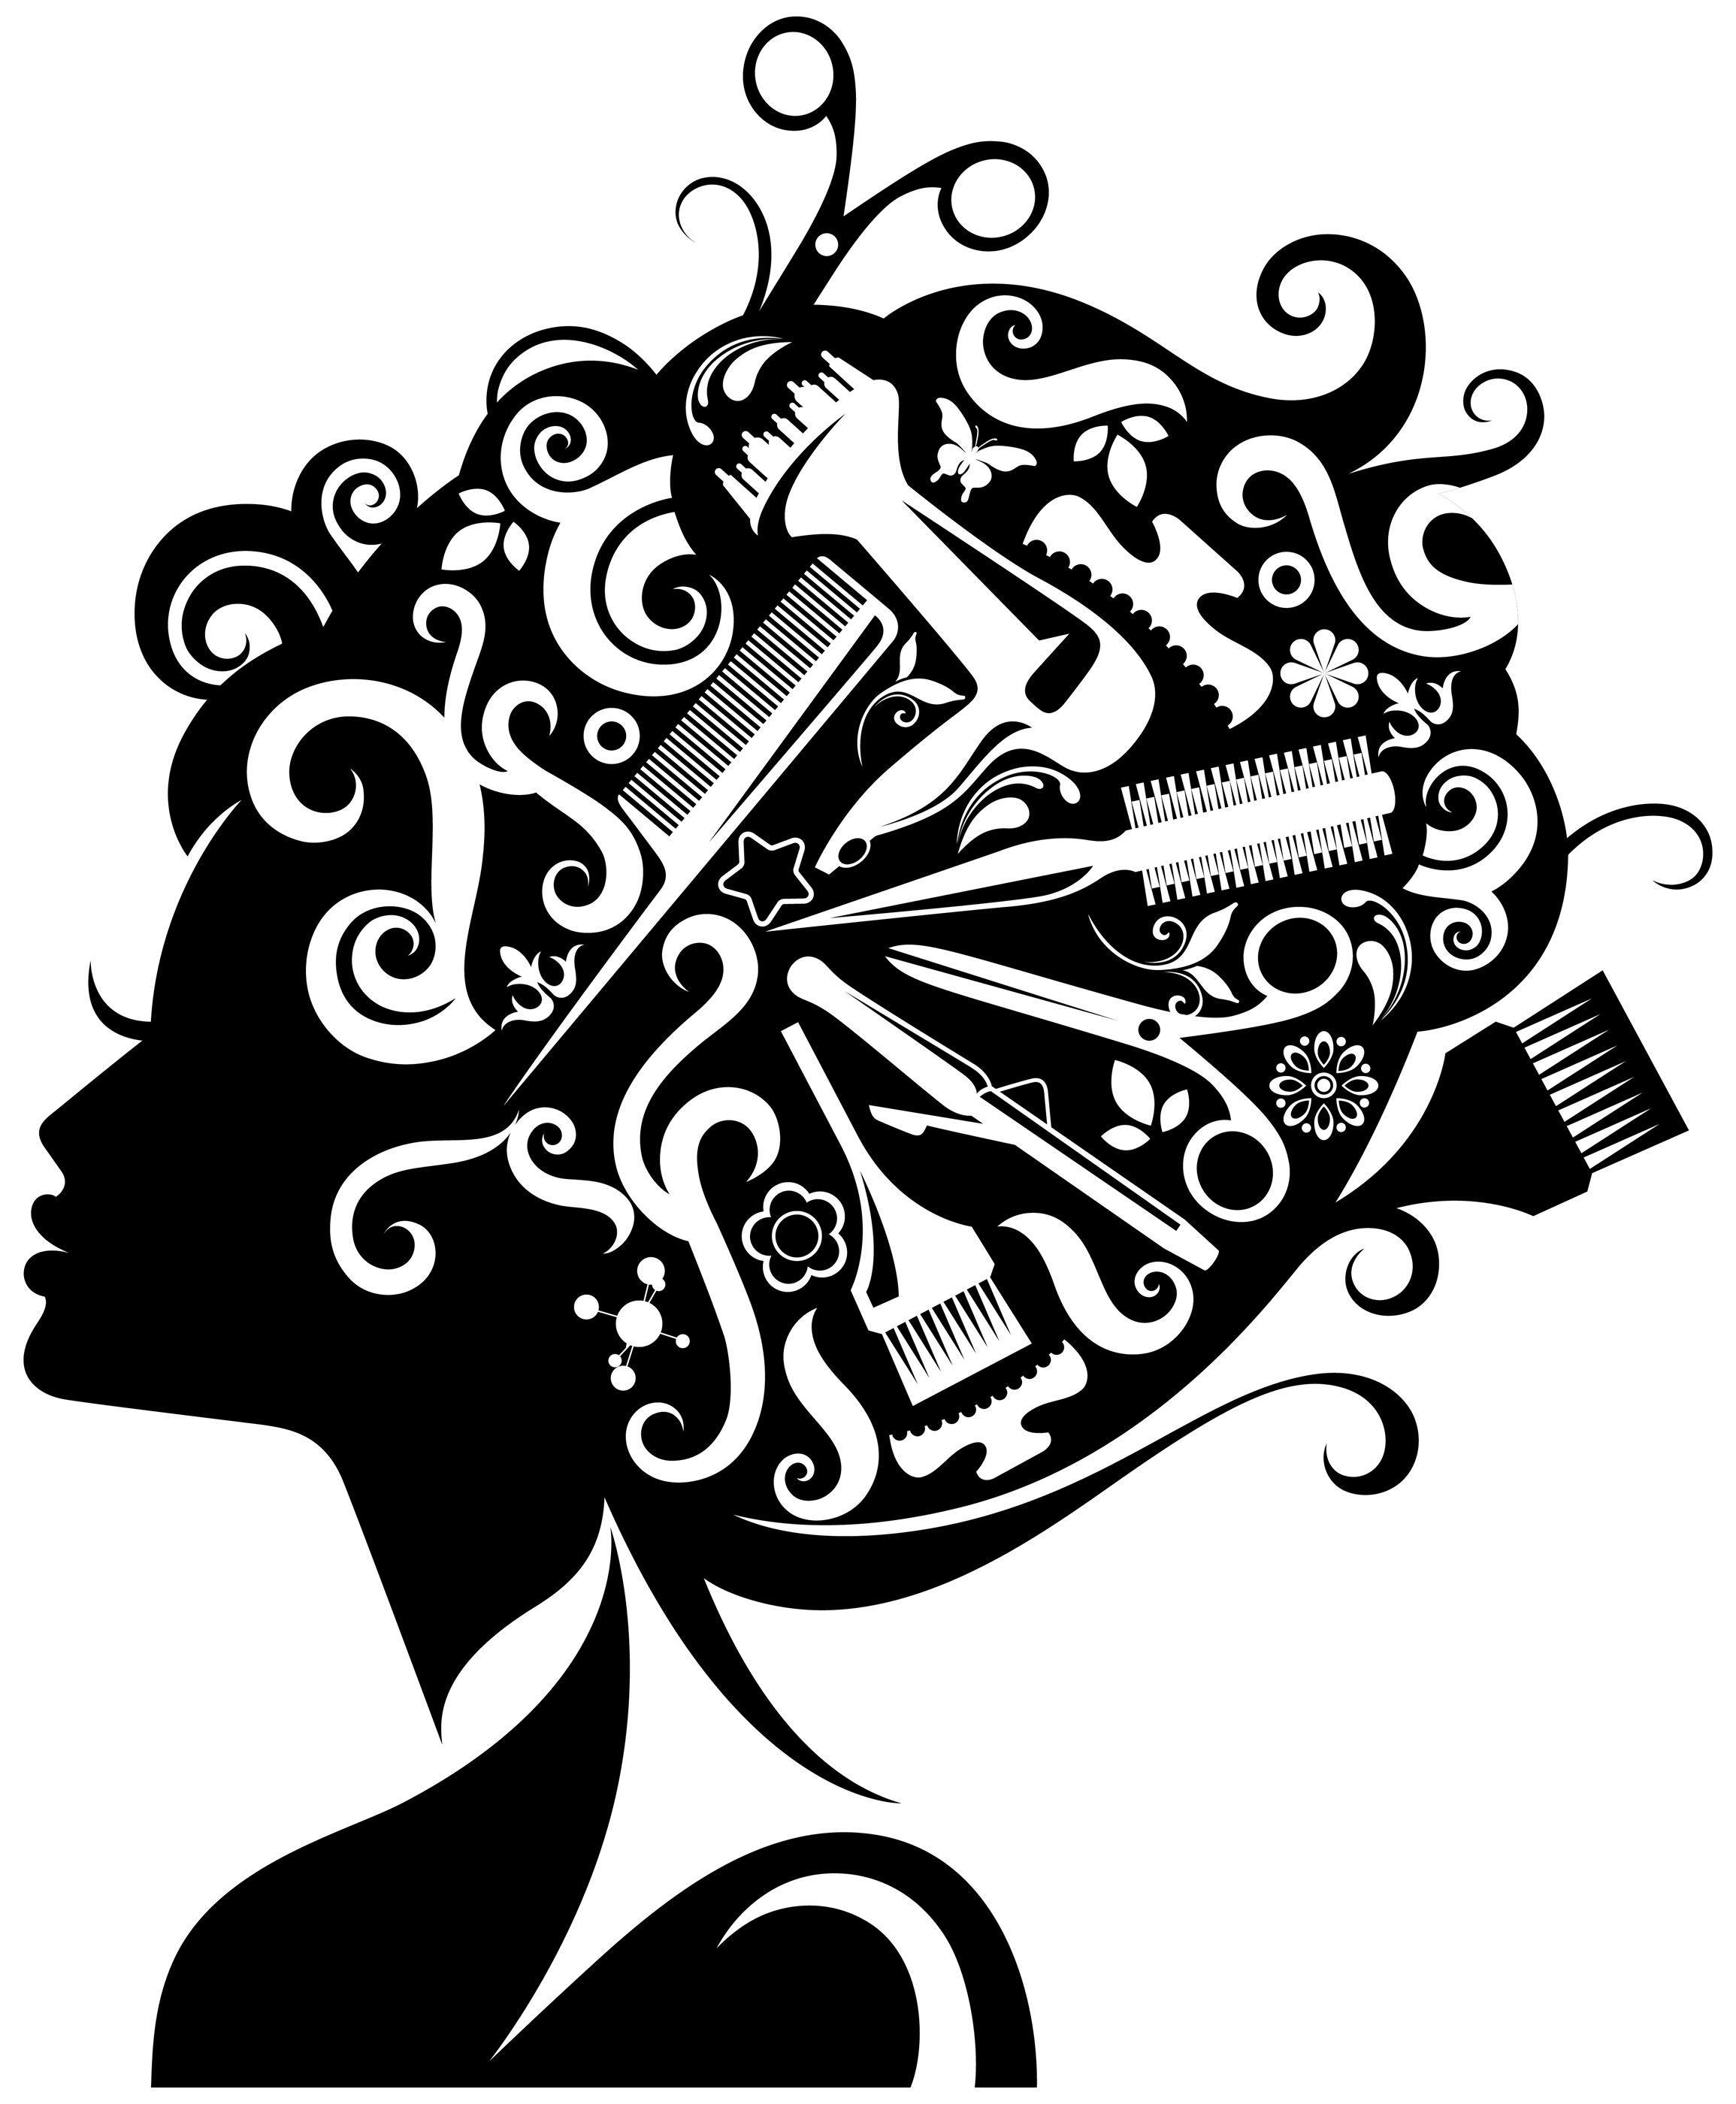 Cosmetology Logo - Career As A Cosmetologist. Beauty School. Beyond 21st Century